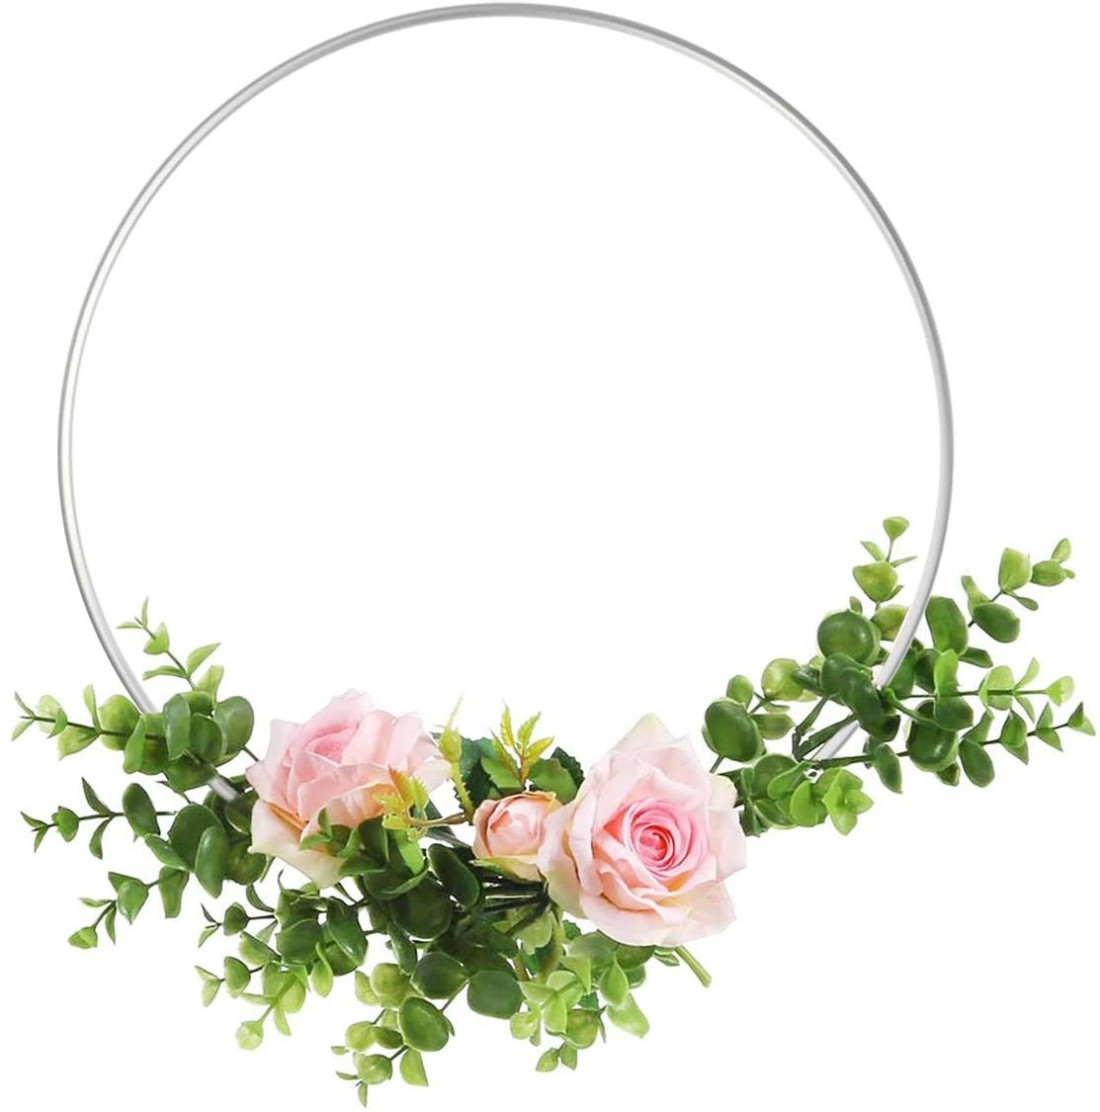 30cm Metal Macrame Rings, Large Metal Hoop for Wedding Wreath Decor And Diy  , 6pcs Gold 